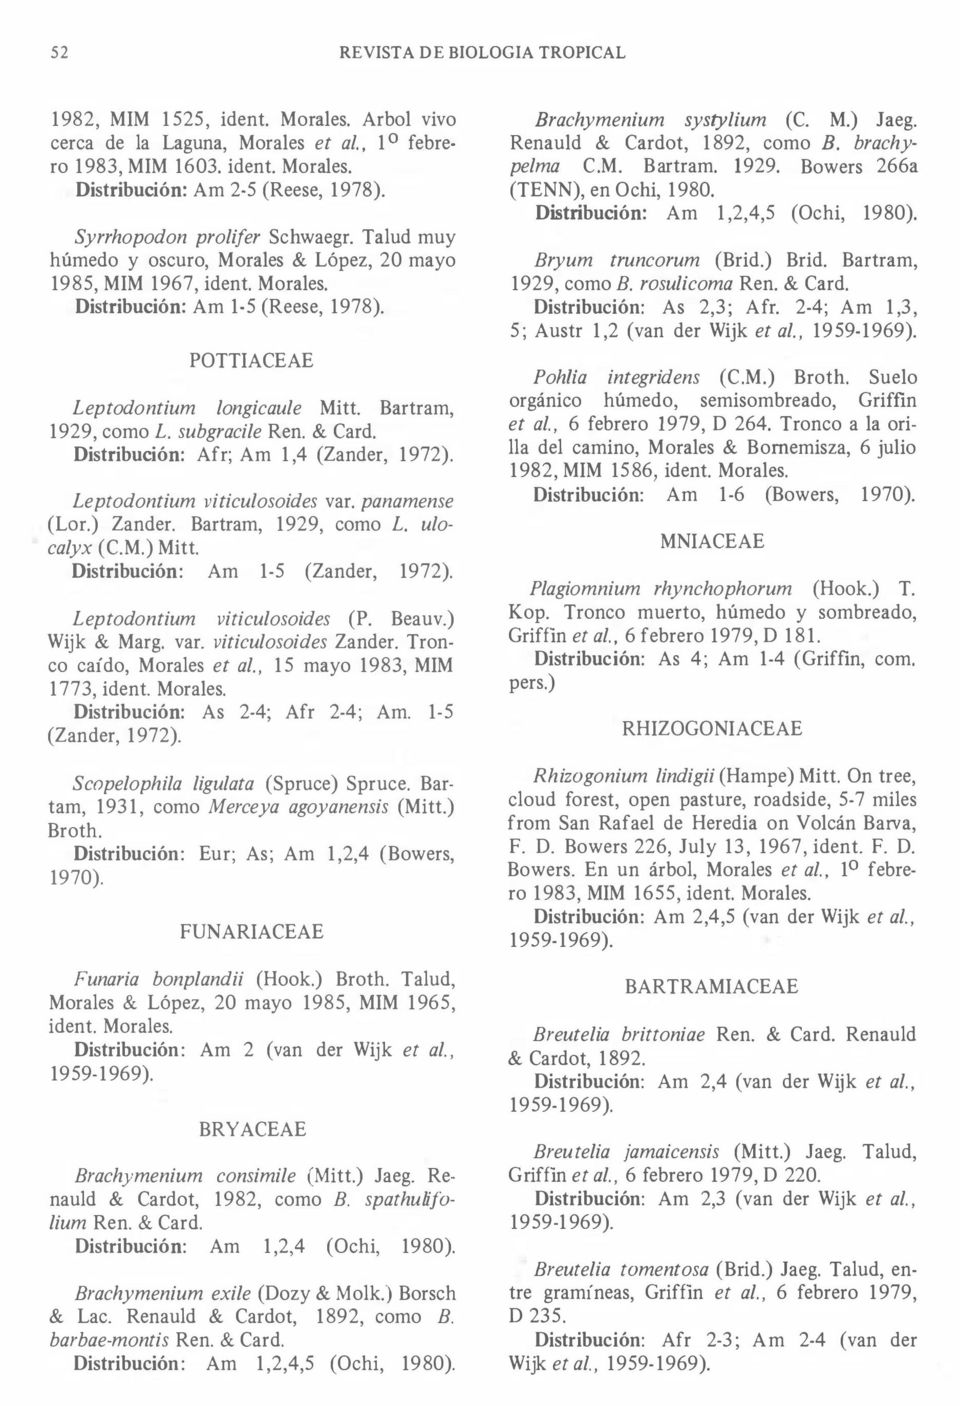 Bartram, 1929, como L. subgracile Ren. & Cardo Distribución: Afr; Am 1,4 (lander, 1972). Leptodontium viticulosoides varo panamense (Lar.) lander. Bartram, 1929, como L. ulocalyx (C.M.) Mitt.